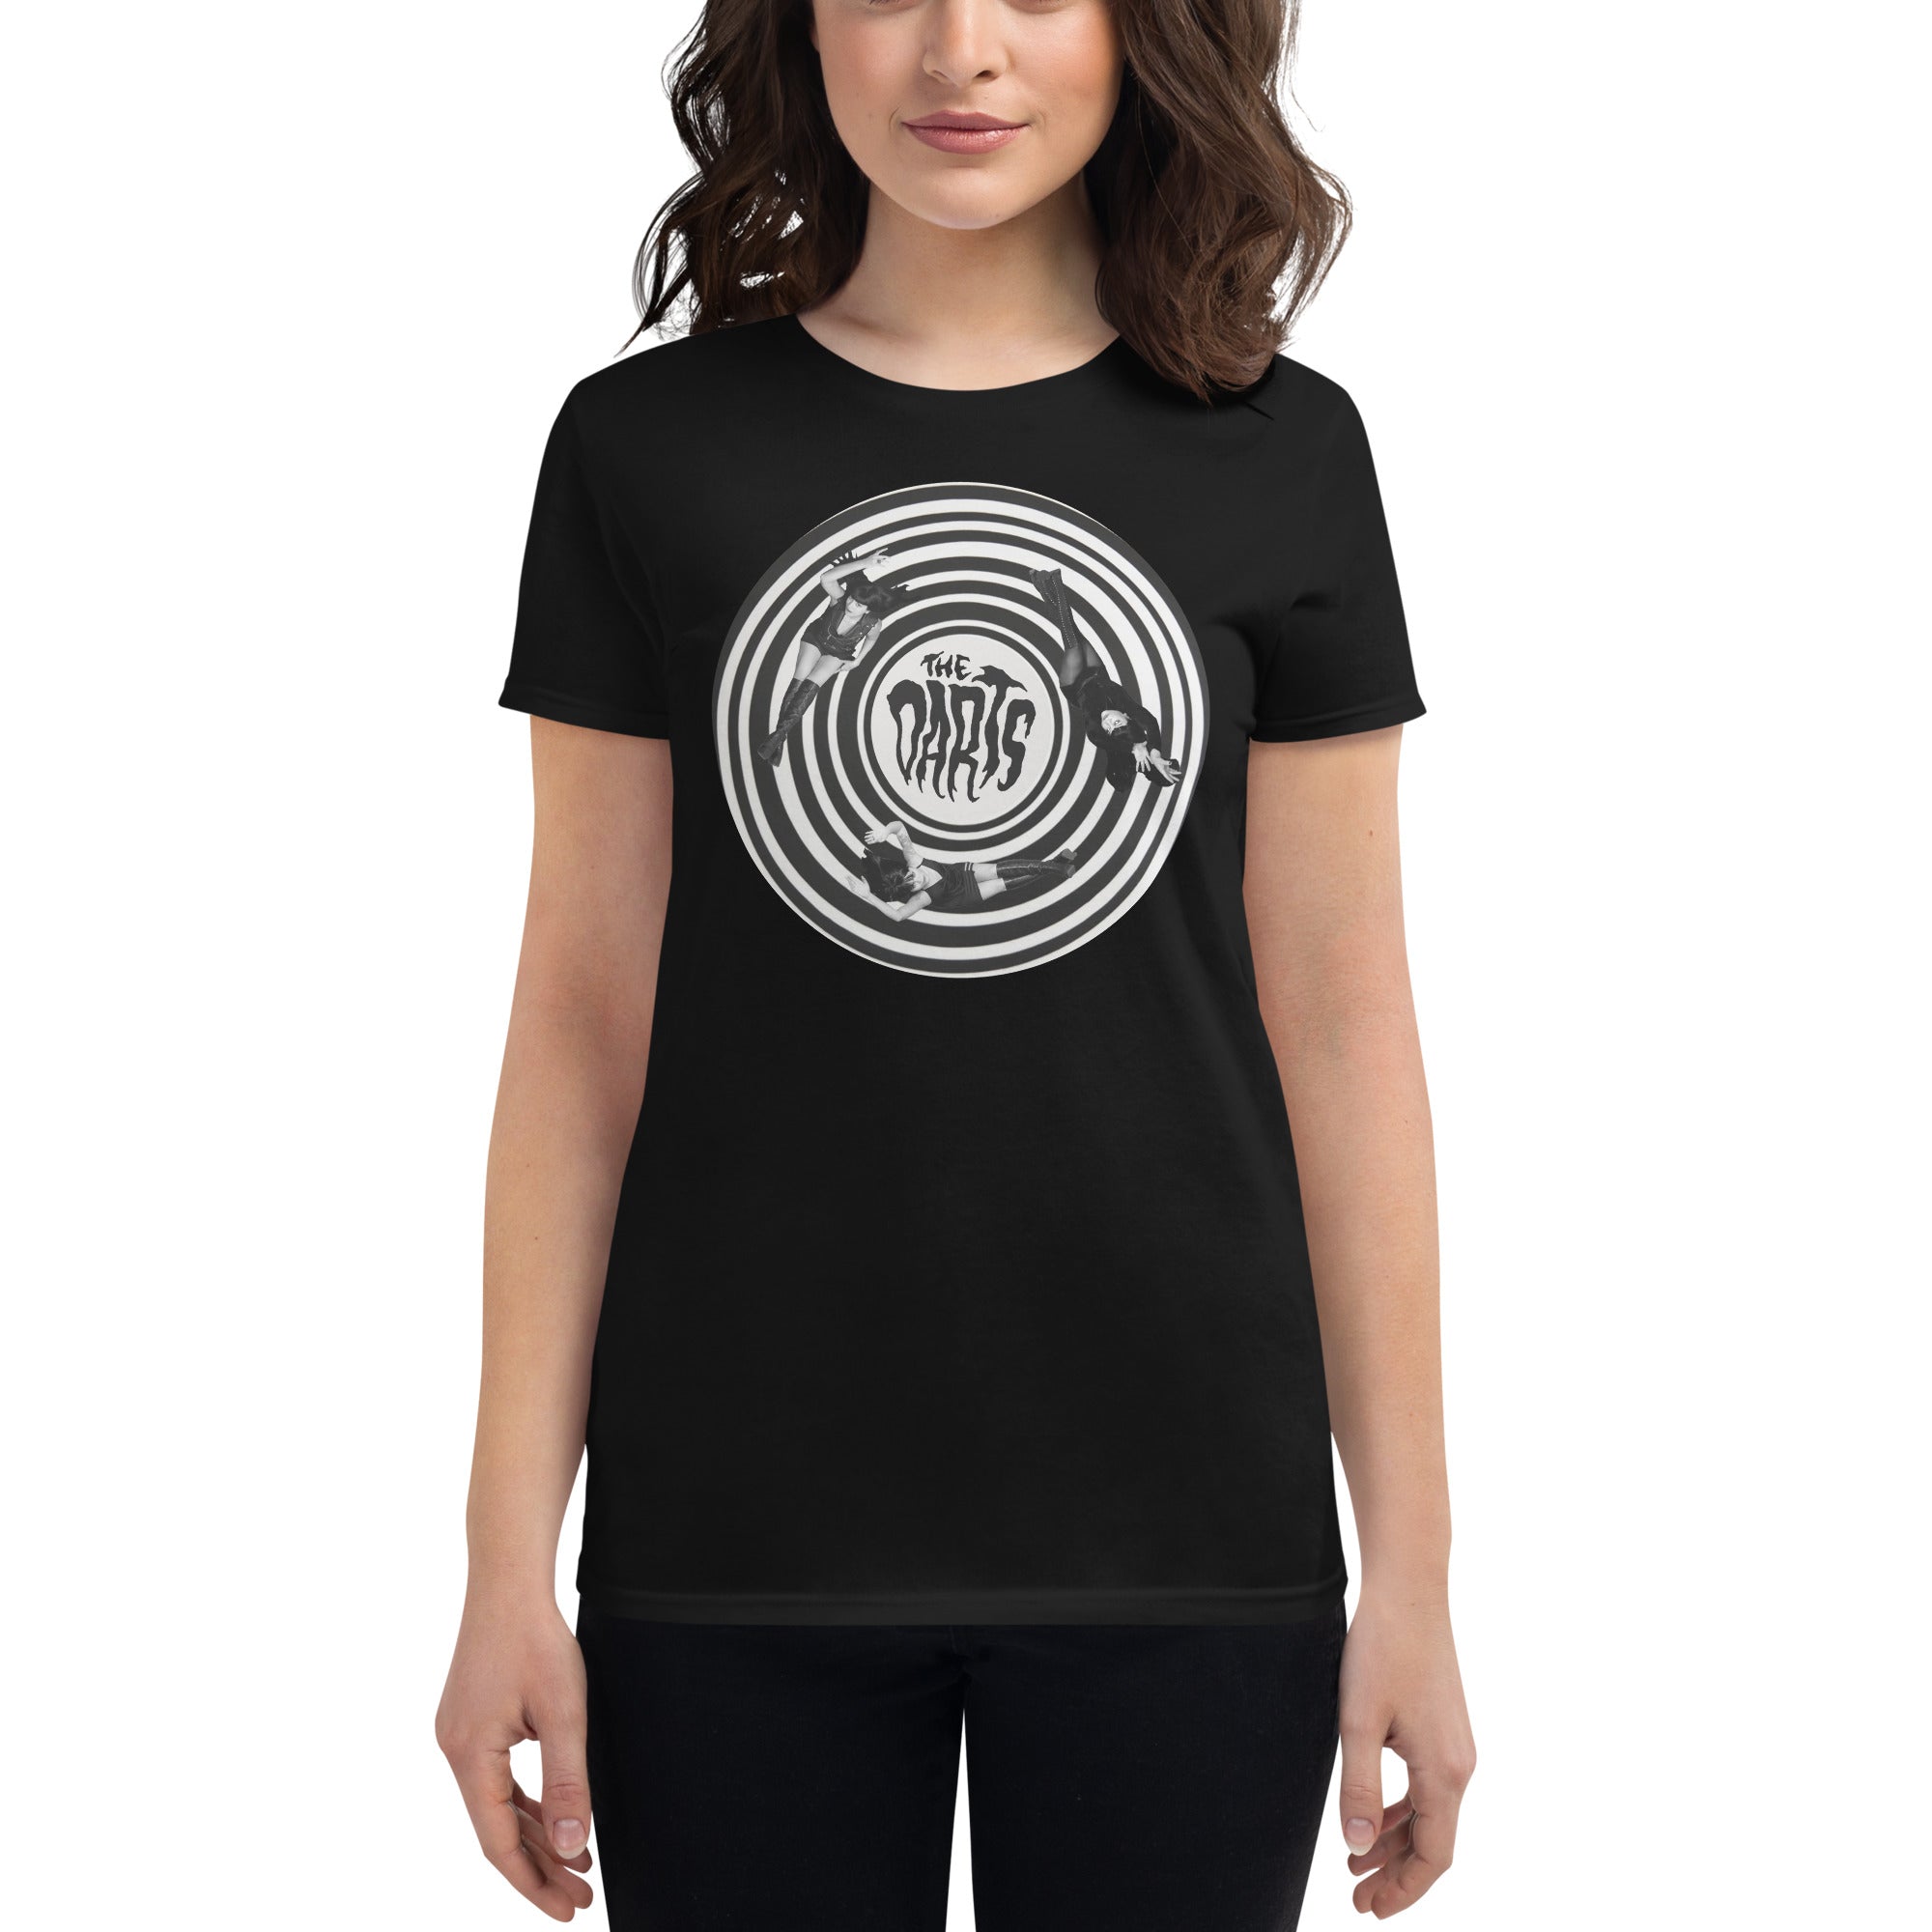 THE DARTS "Spiral" Femme Black T-Shirt